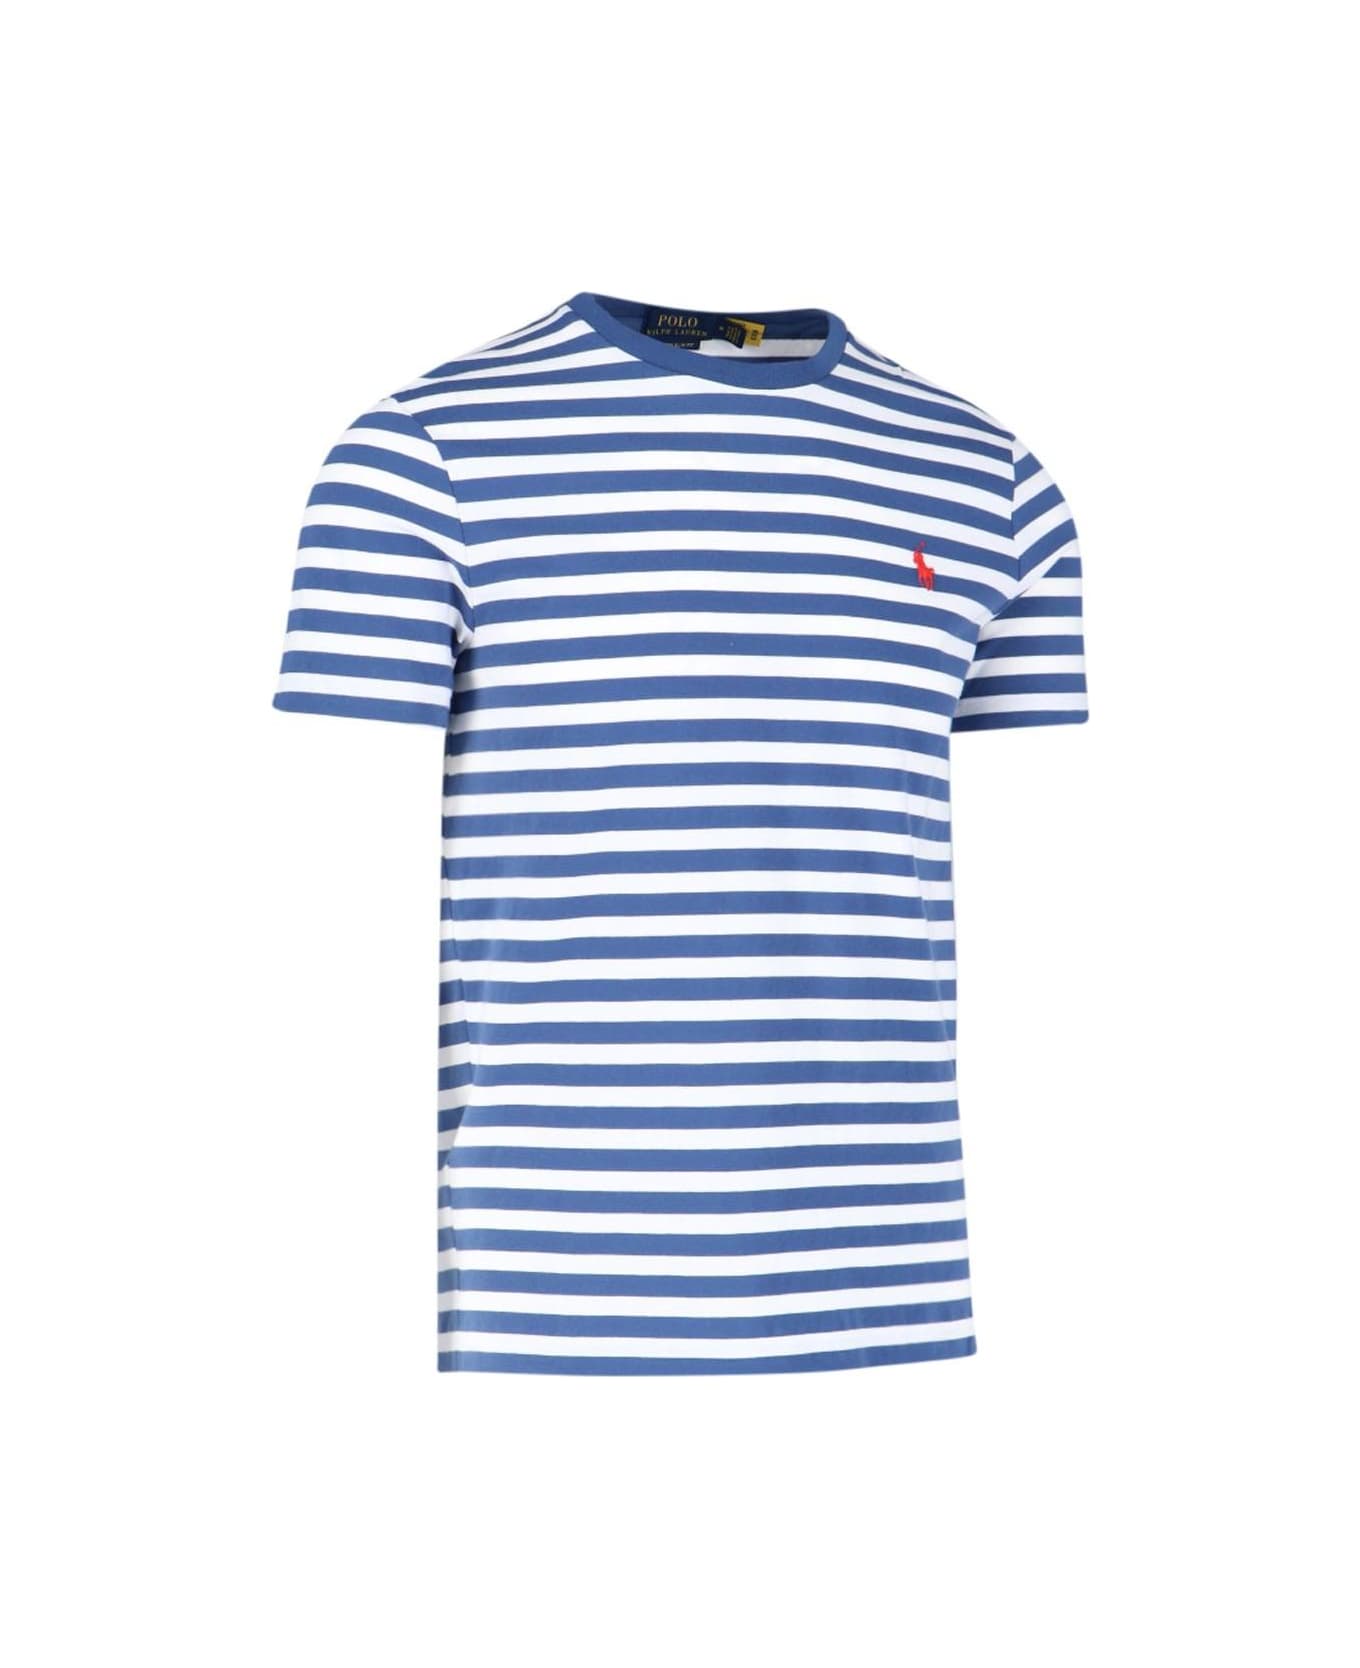 Ralph Lauren Logo Striped T-shirt - Old Royal White シャツ